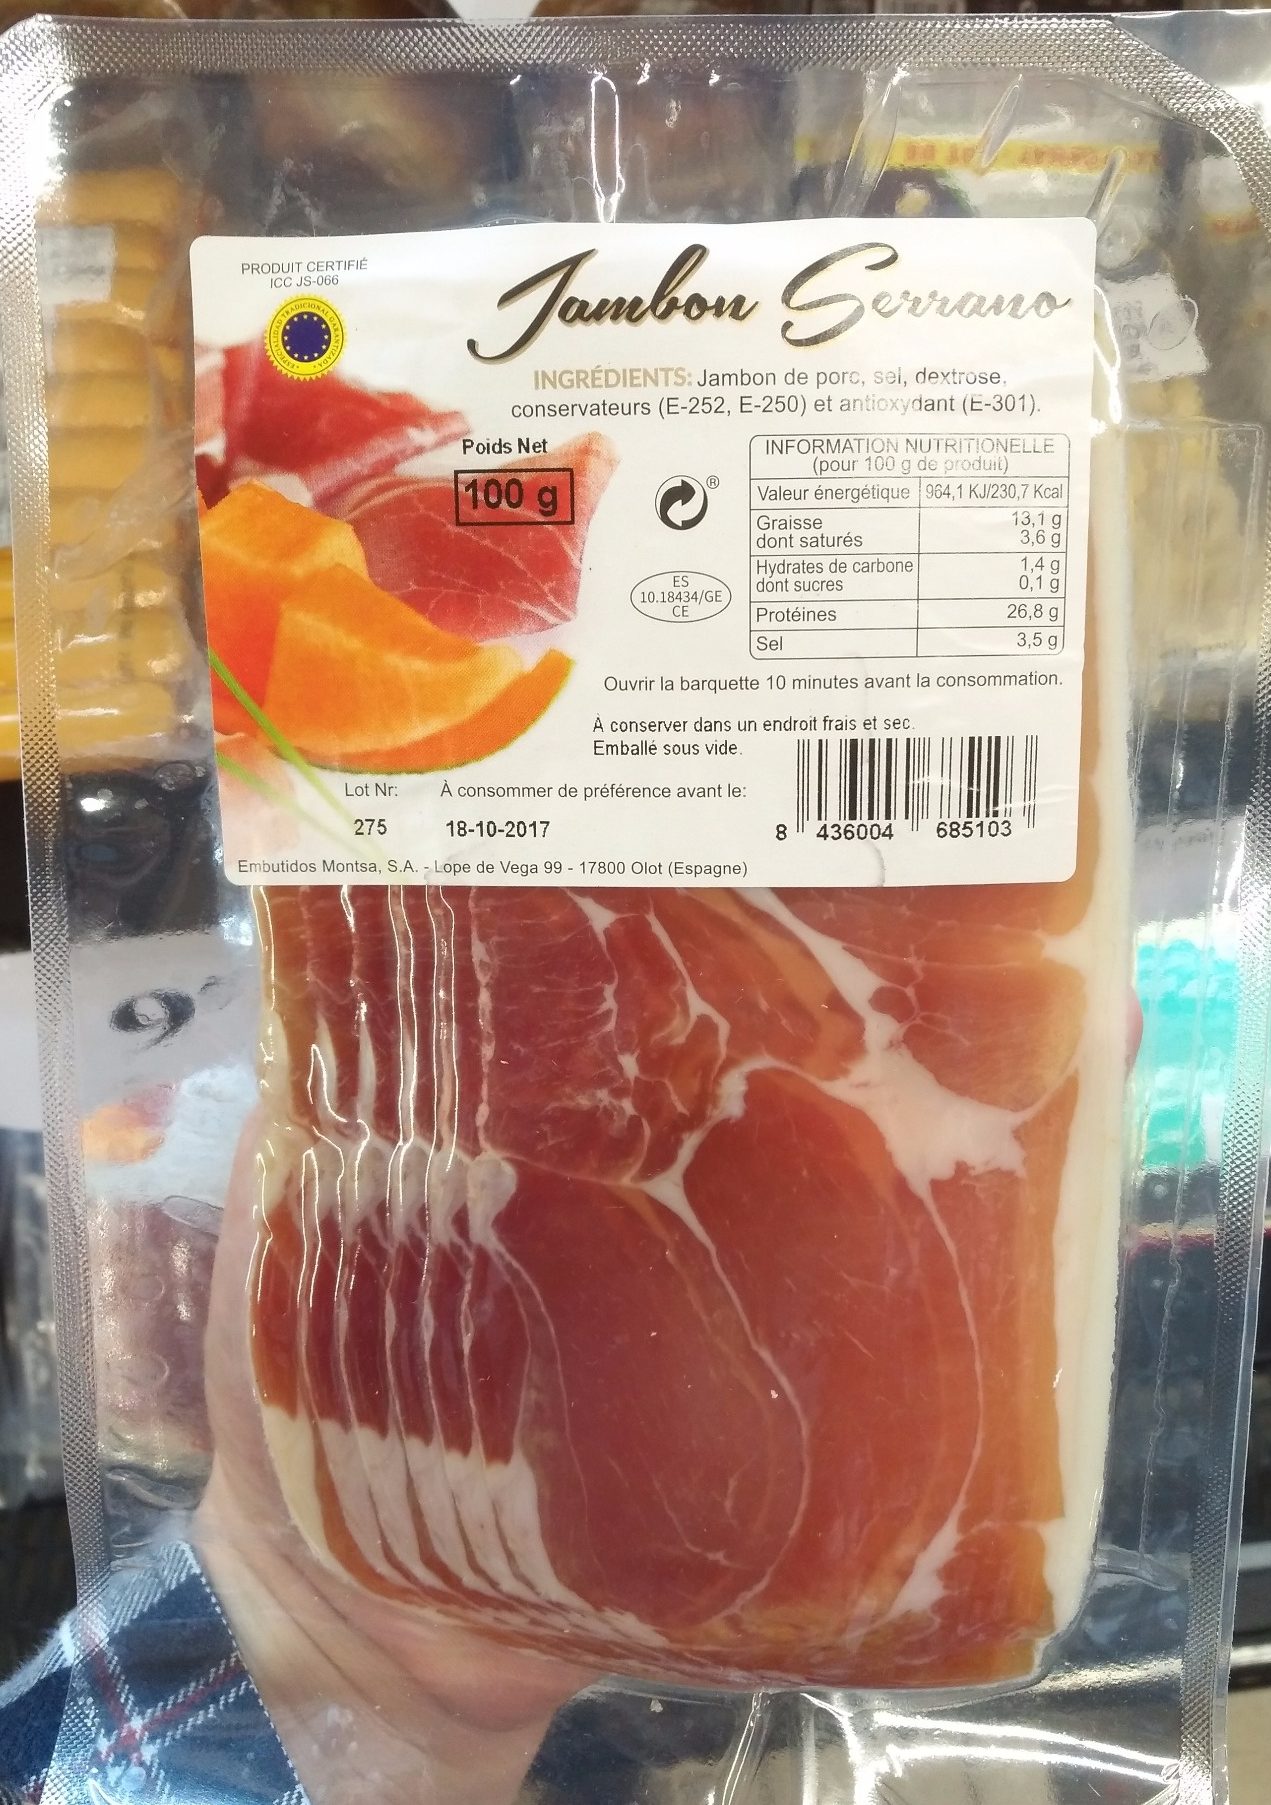 Jambon serrano - Product - fr